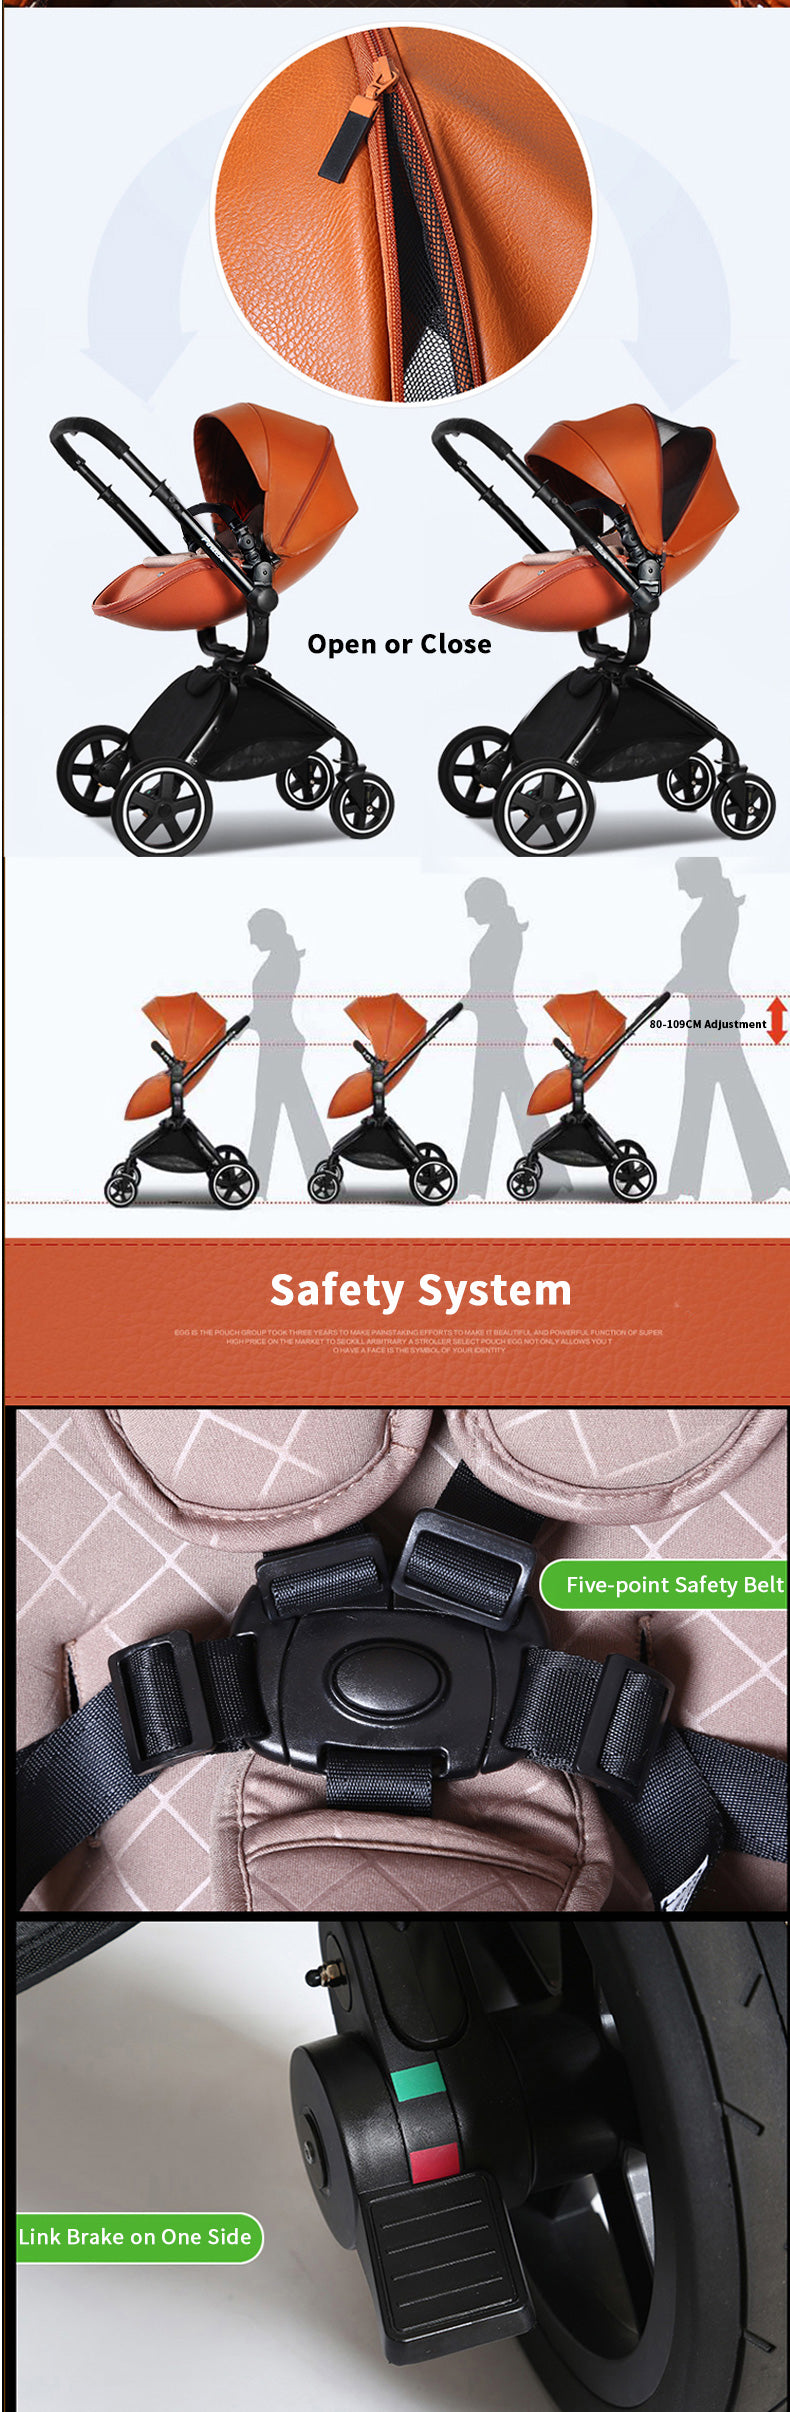 pouch stroller website